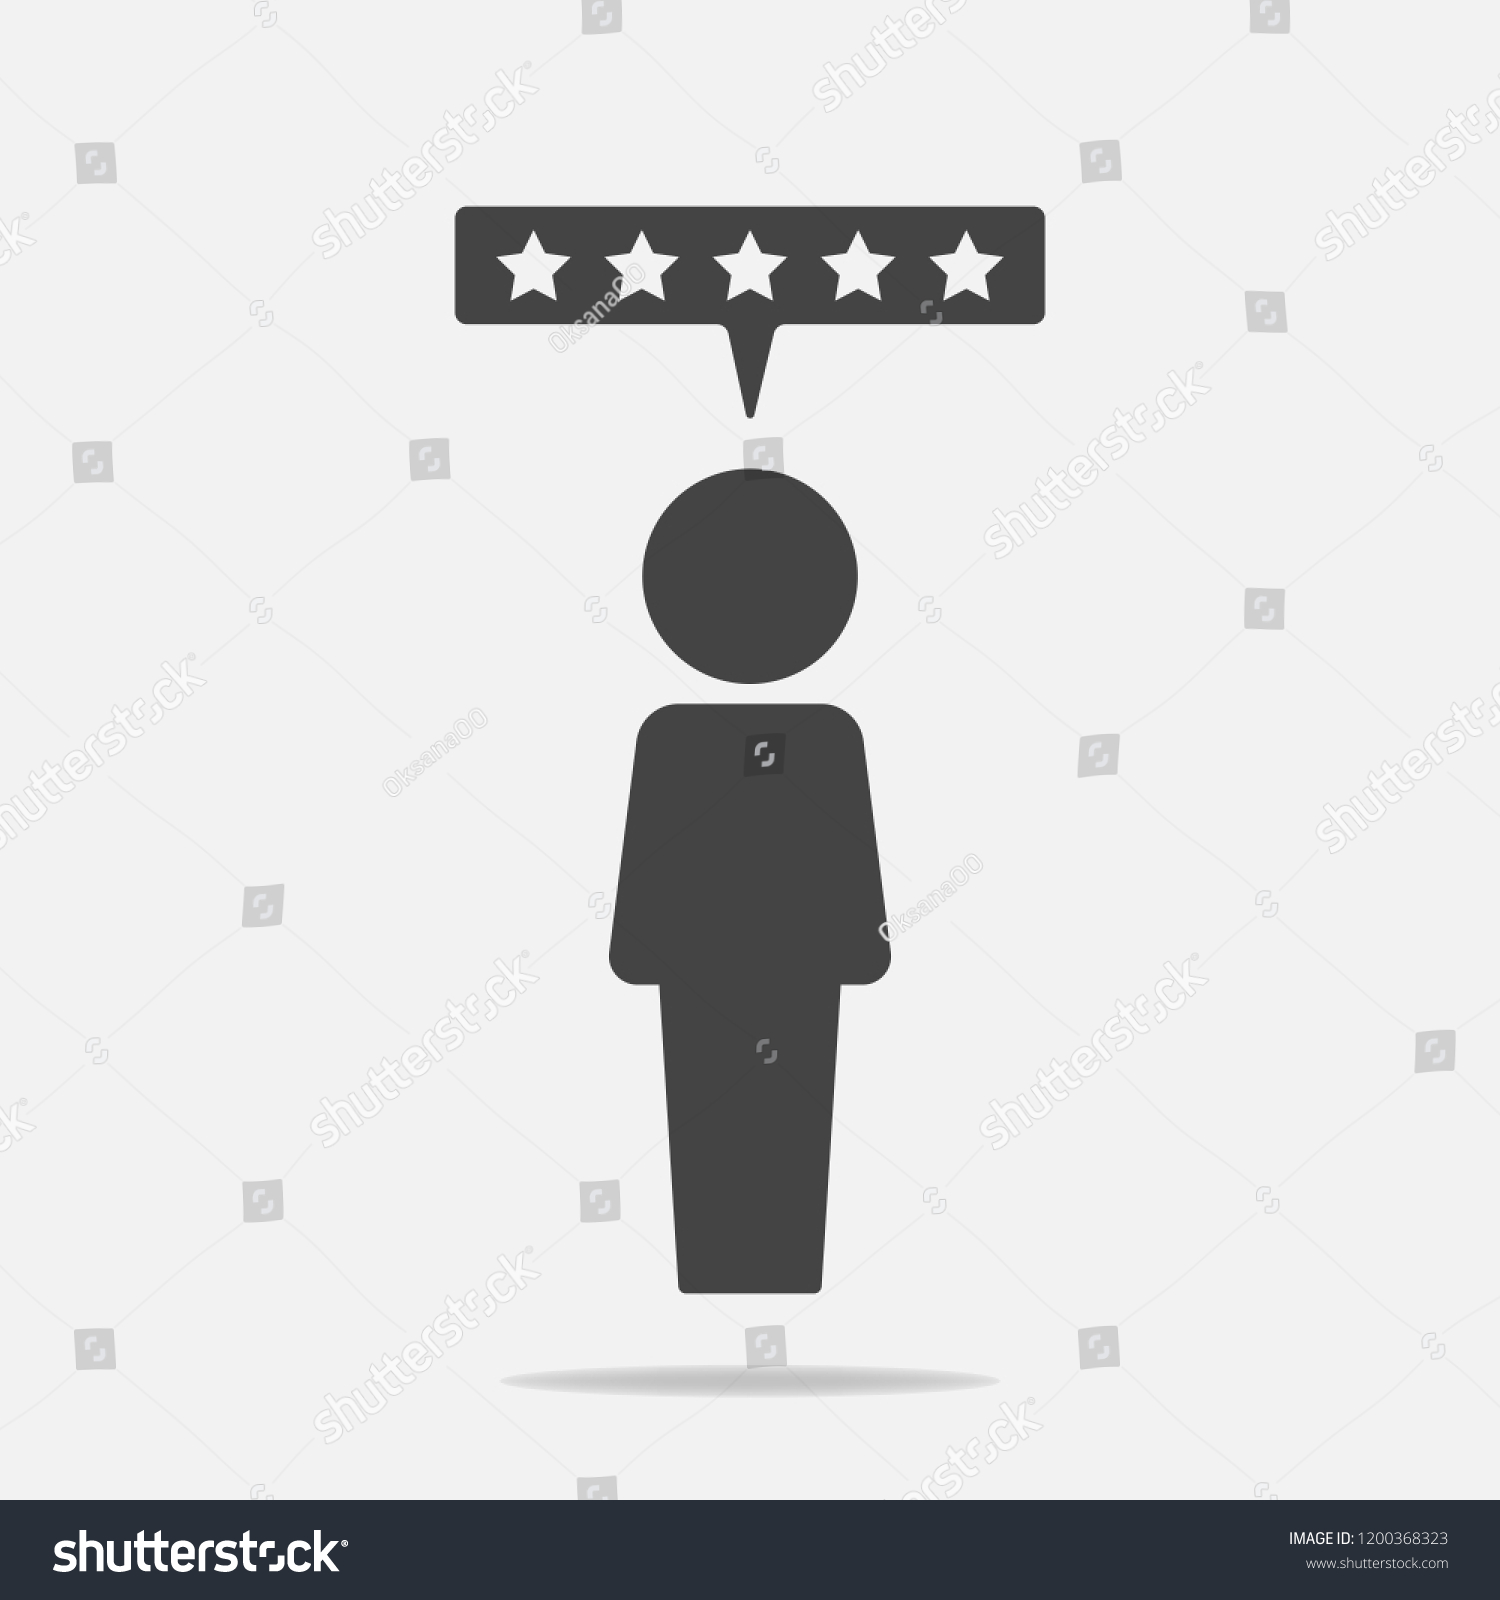 Customer Review Icon Raiting Feedback Illustration Stock Vector Royalty Free